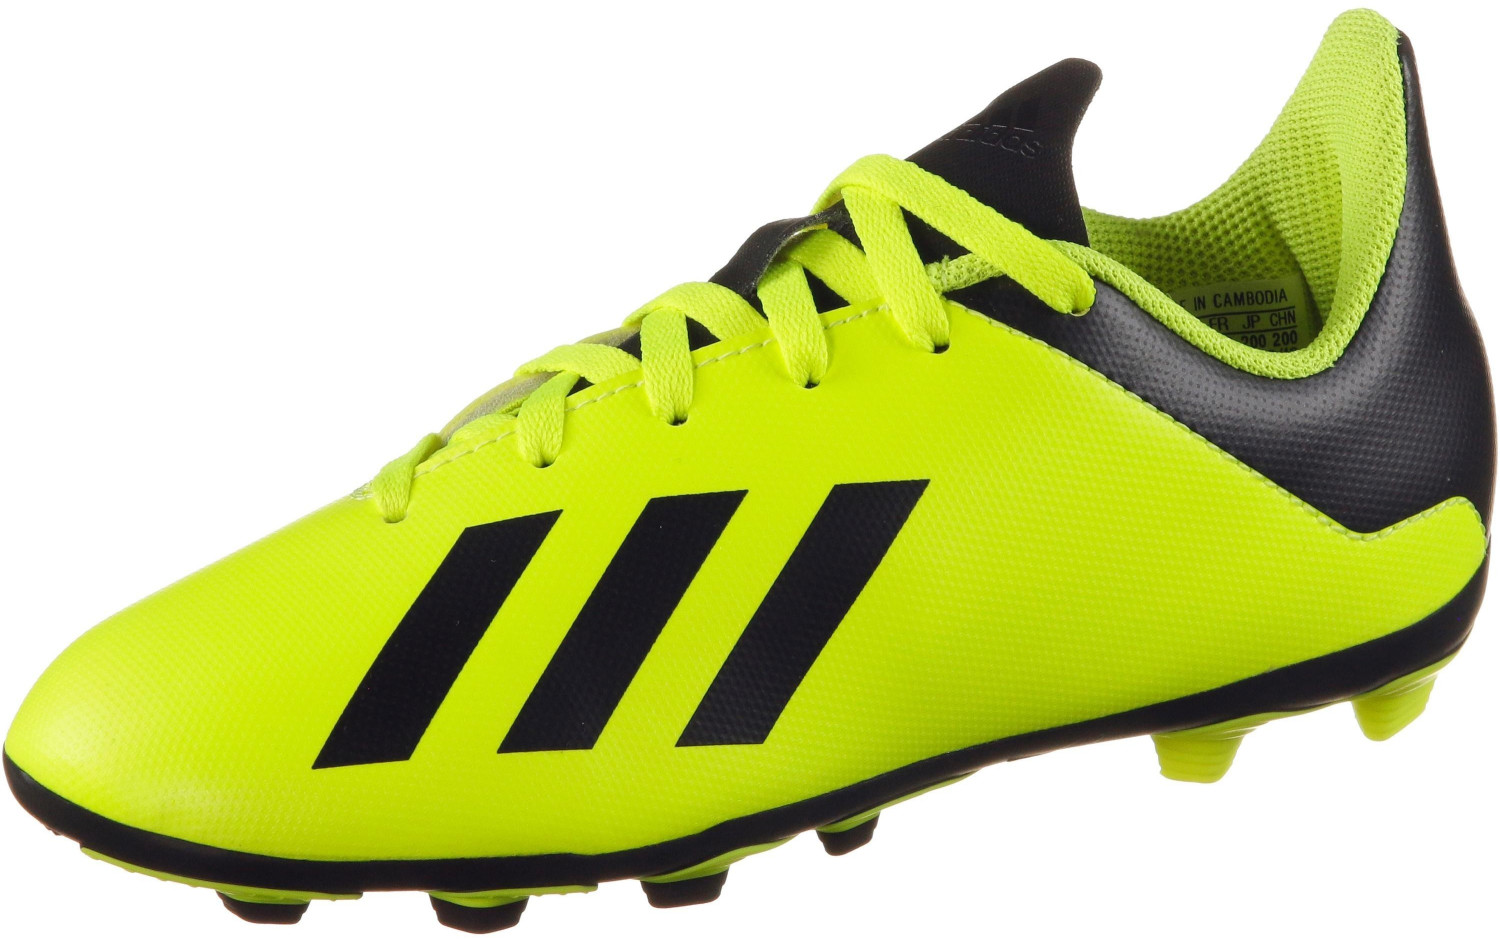 Adidas X 18.4 FXG J Football Boots DB2420 Youth solar yellow/ core black / solar yellow